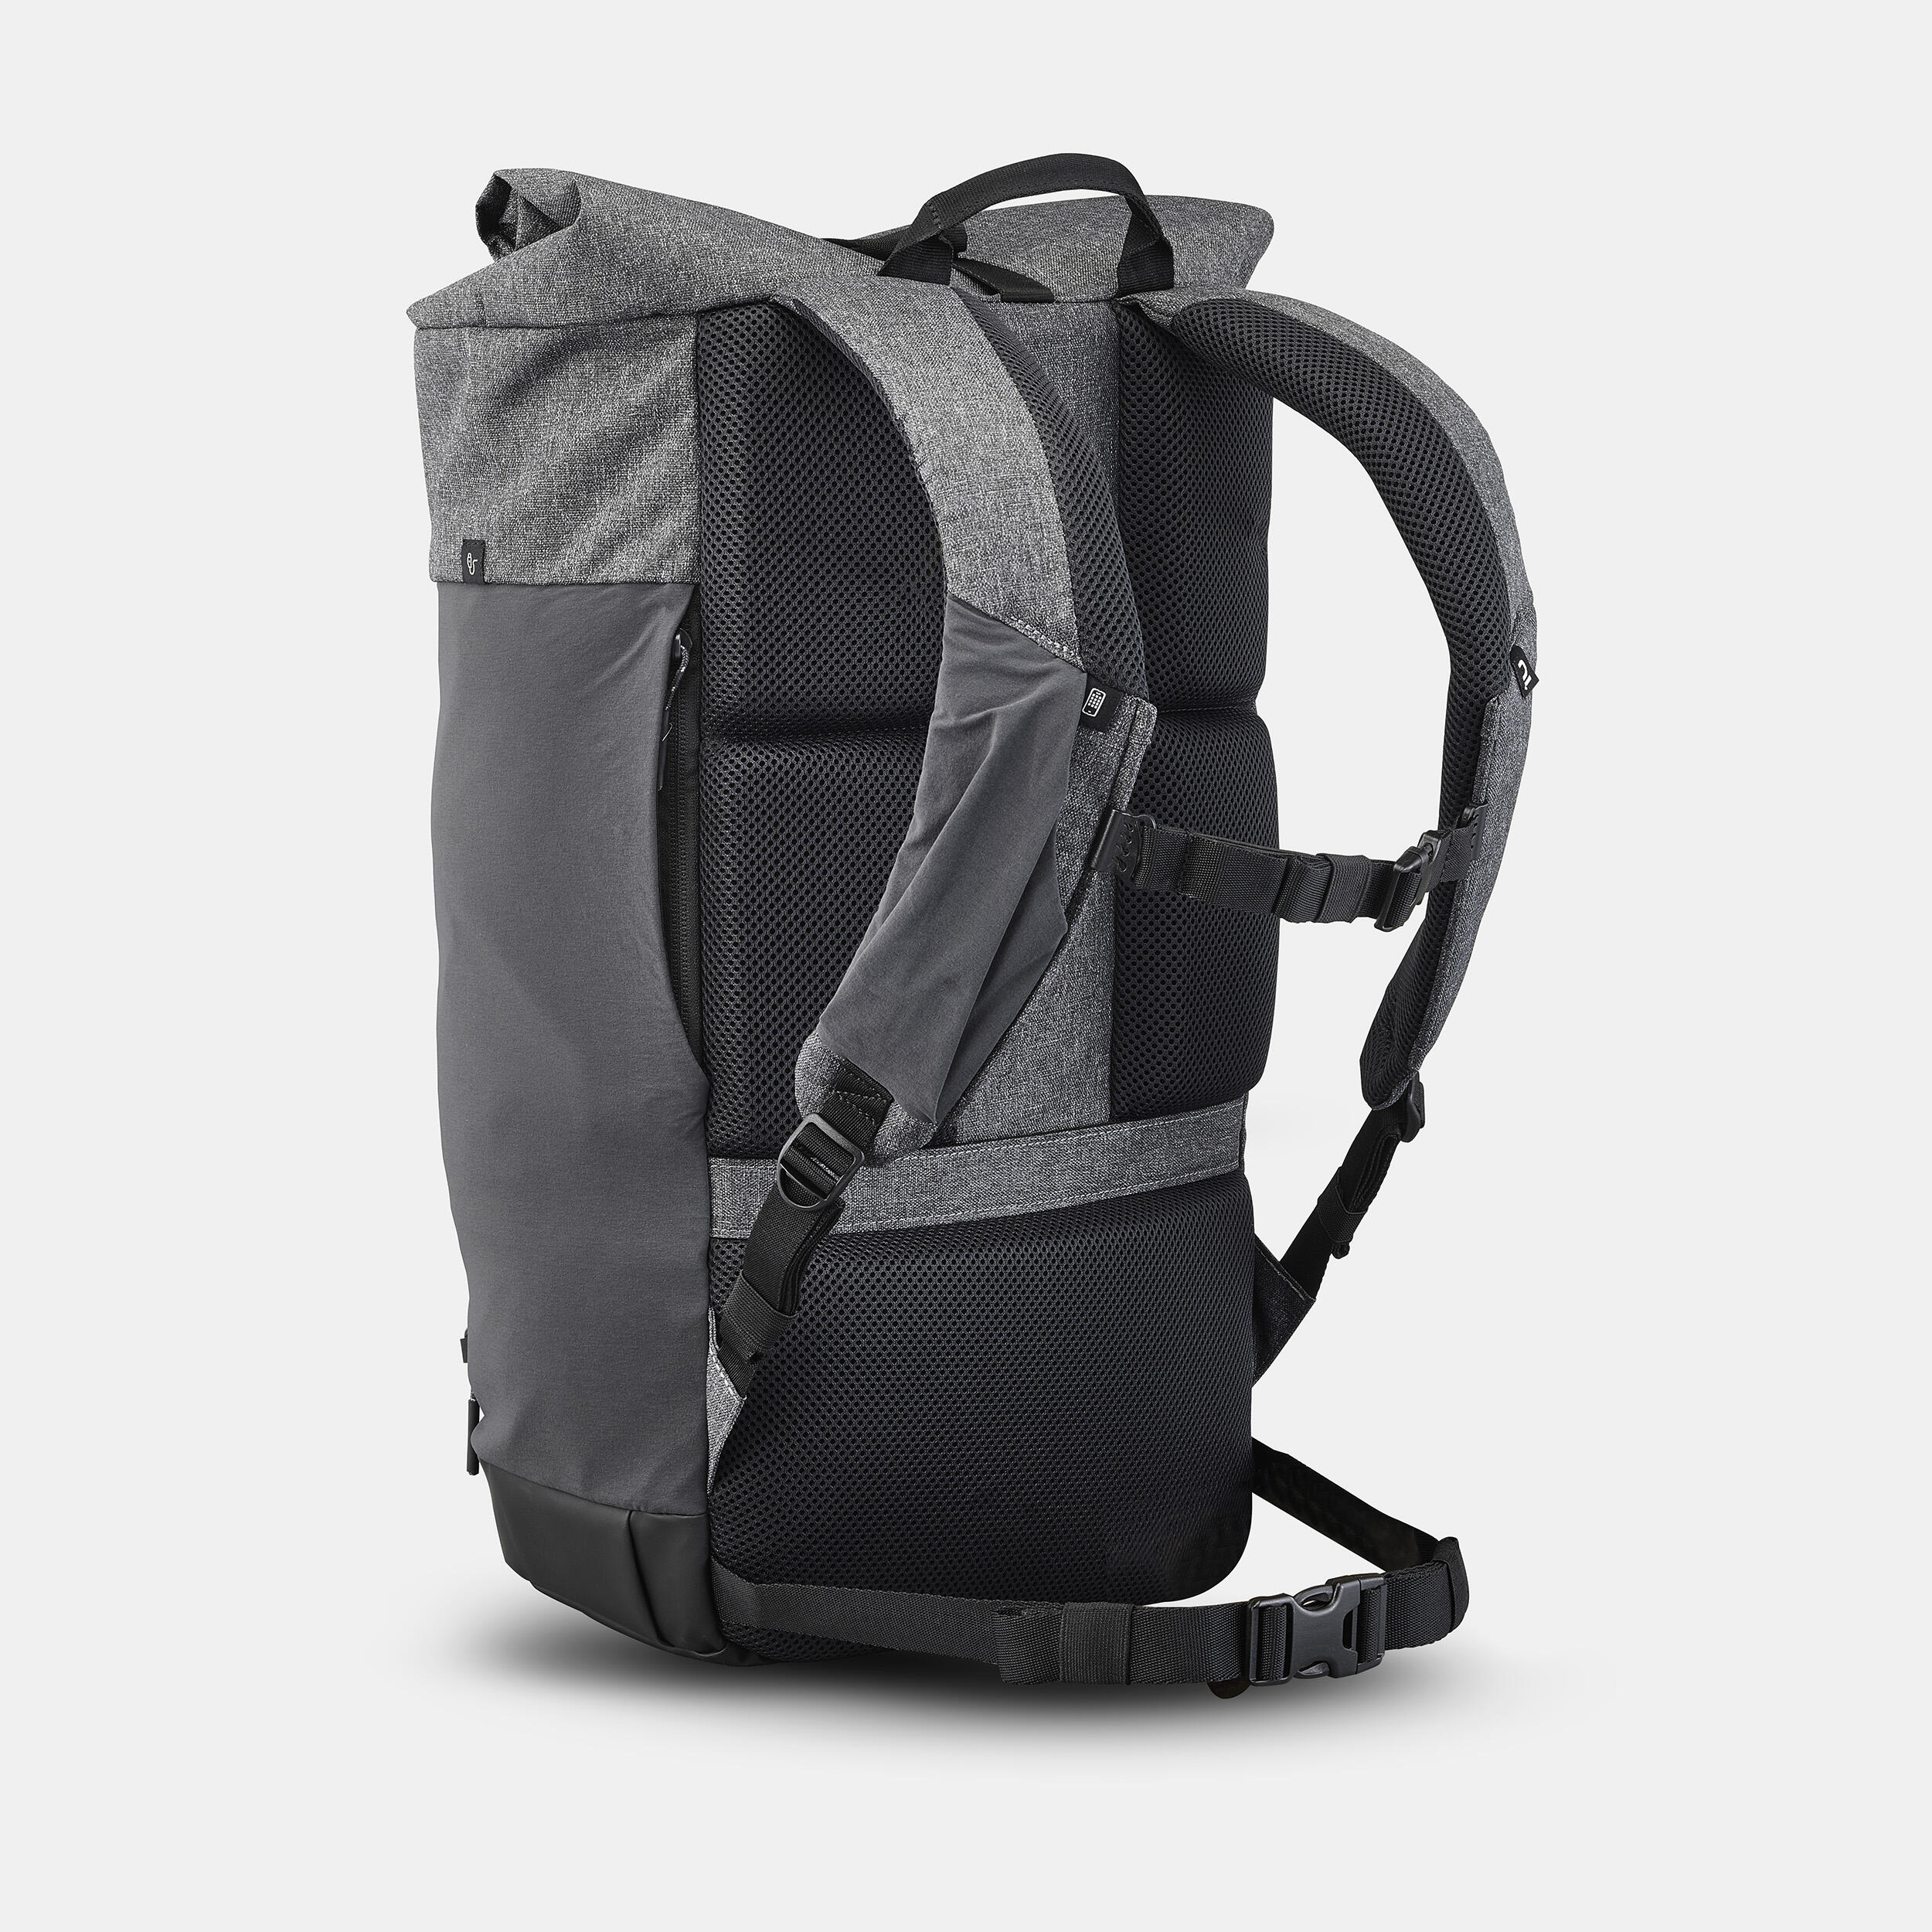 Hiking Backpack 32 L - NH 500 Grey/Black - QUECHUA